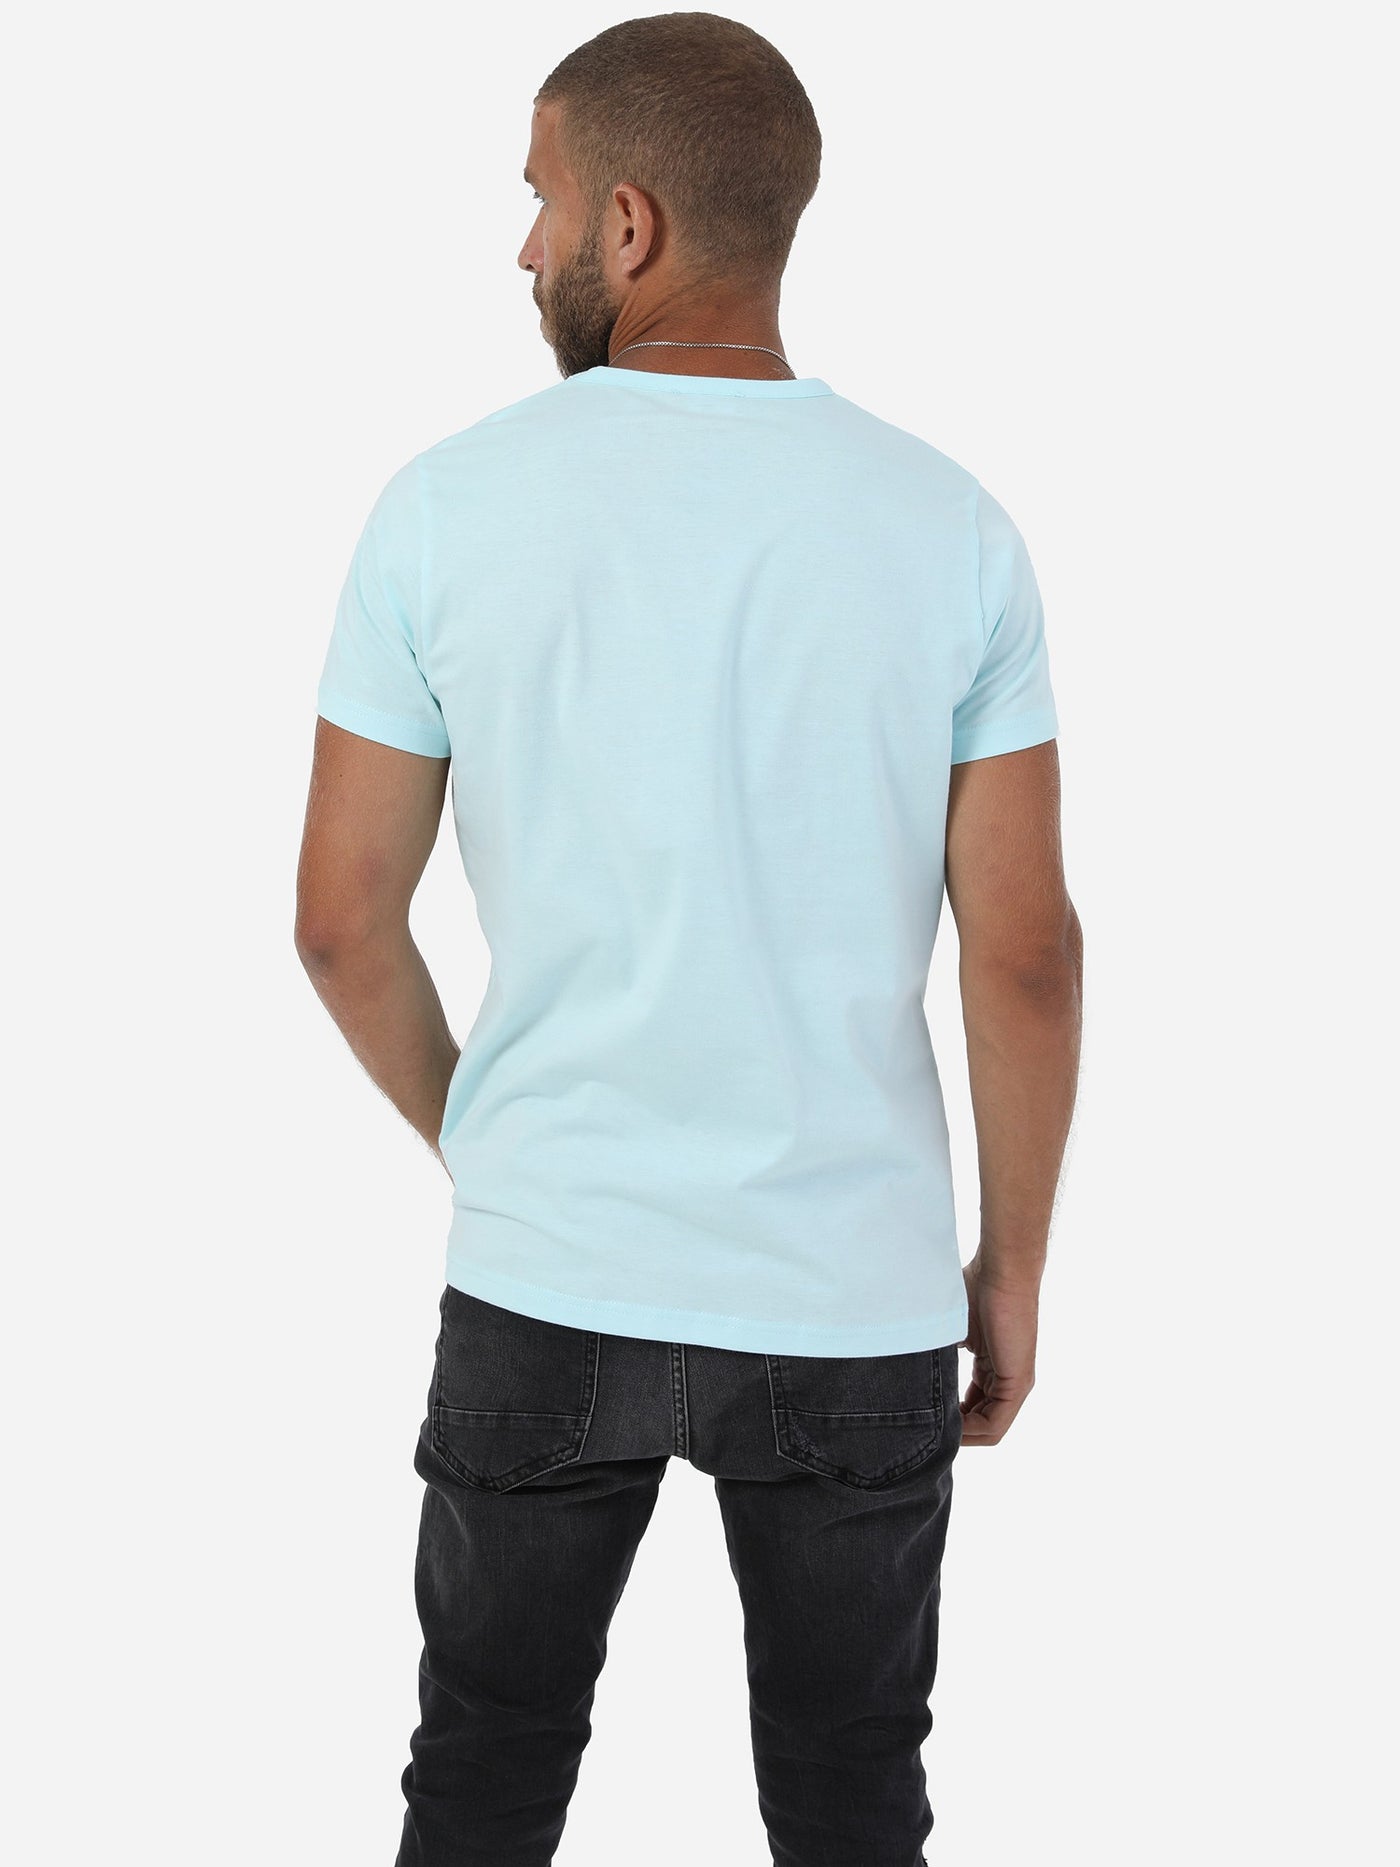 Eezeey Men's V-Neck Plain T-Shirt